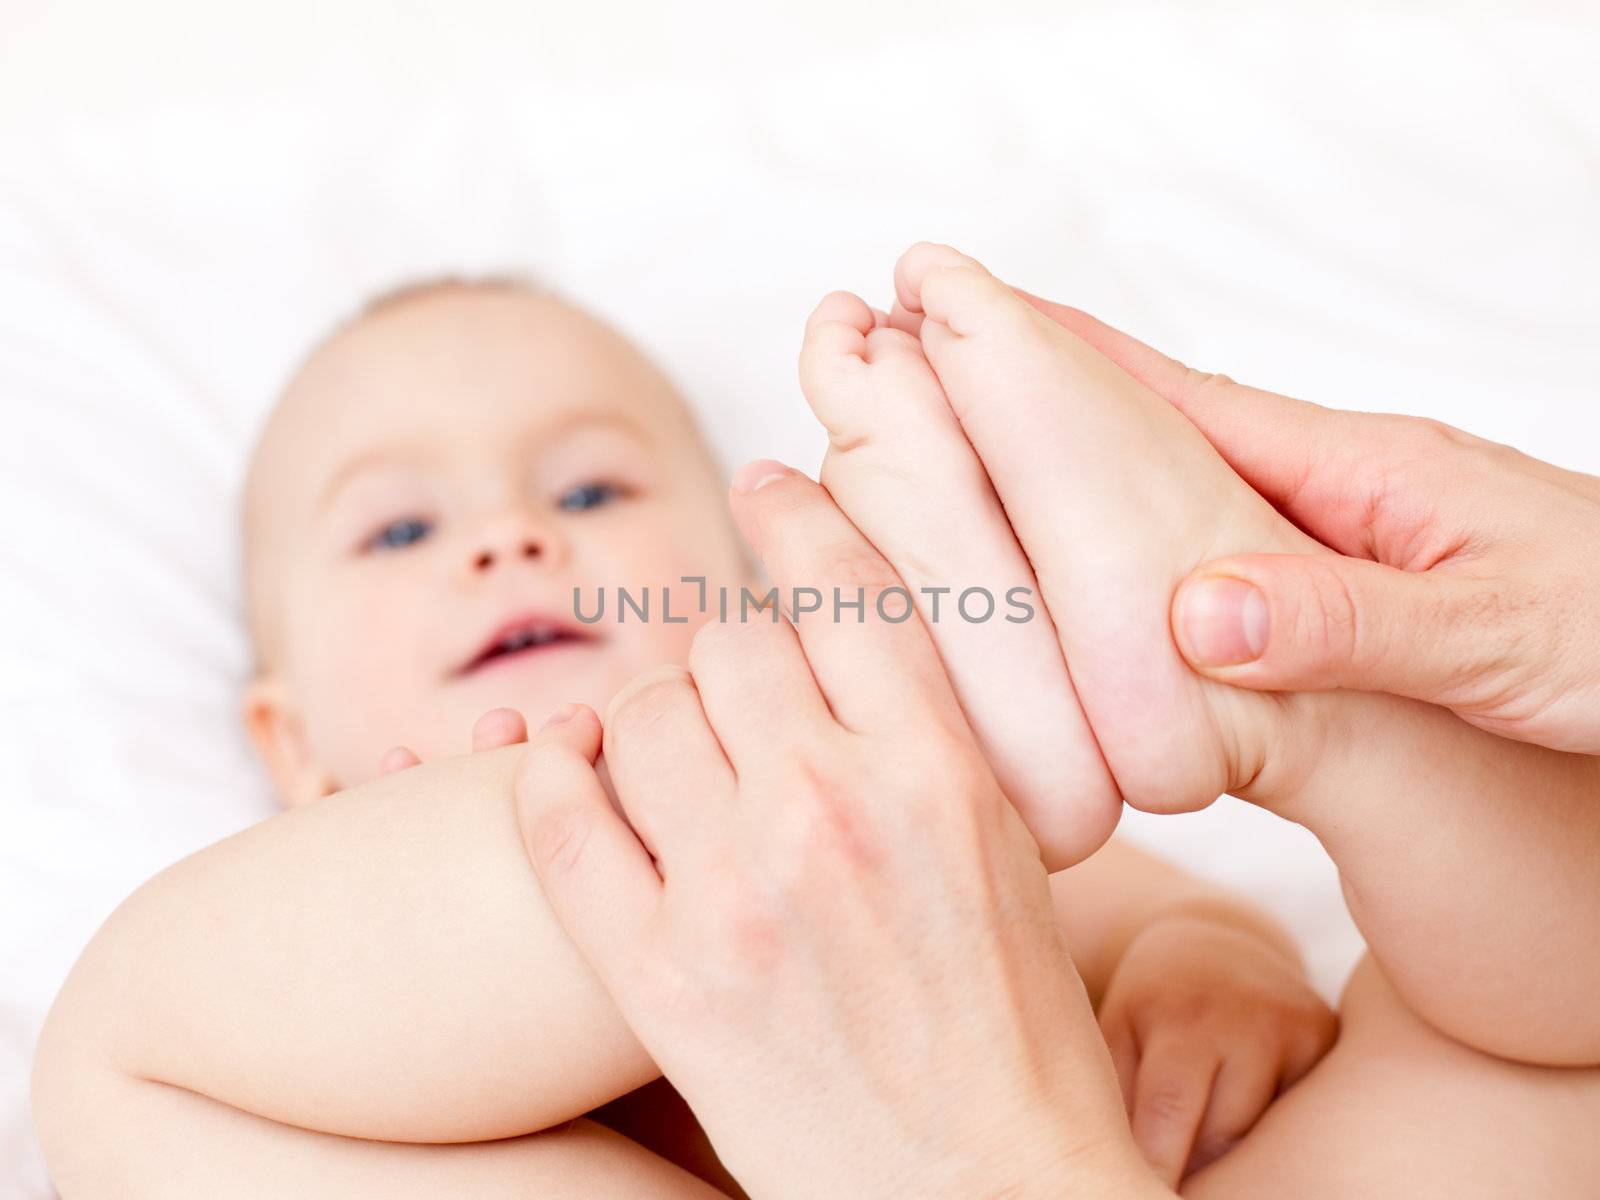 Foot massage by naumoid